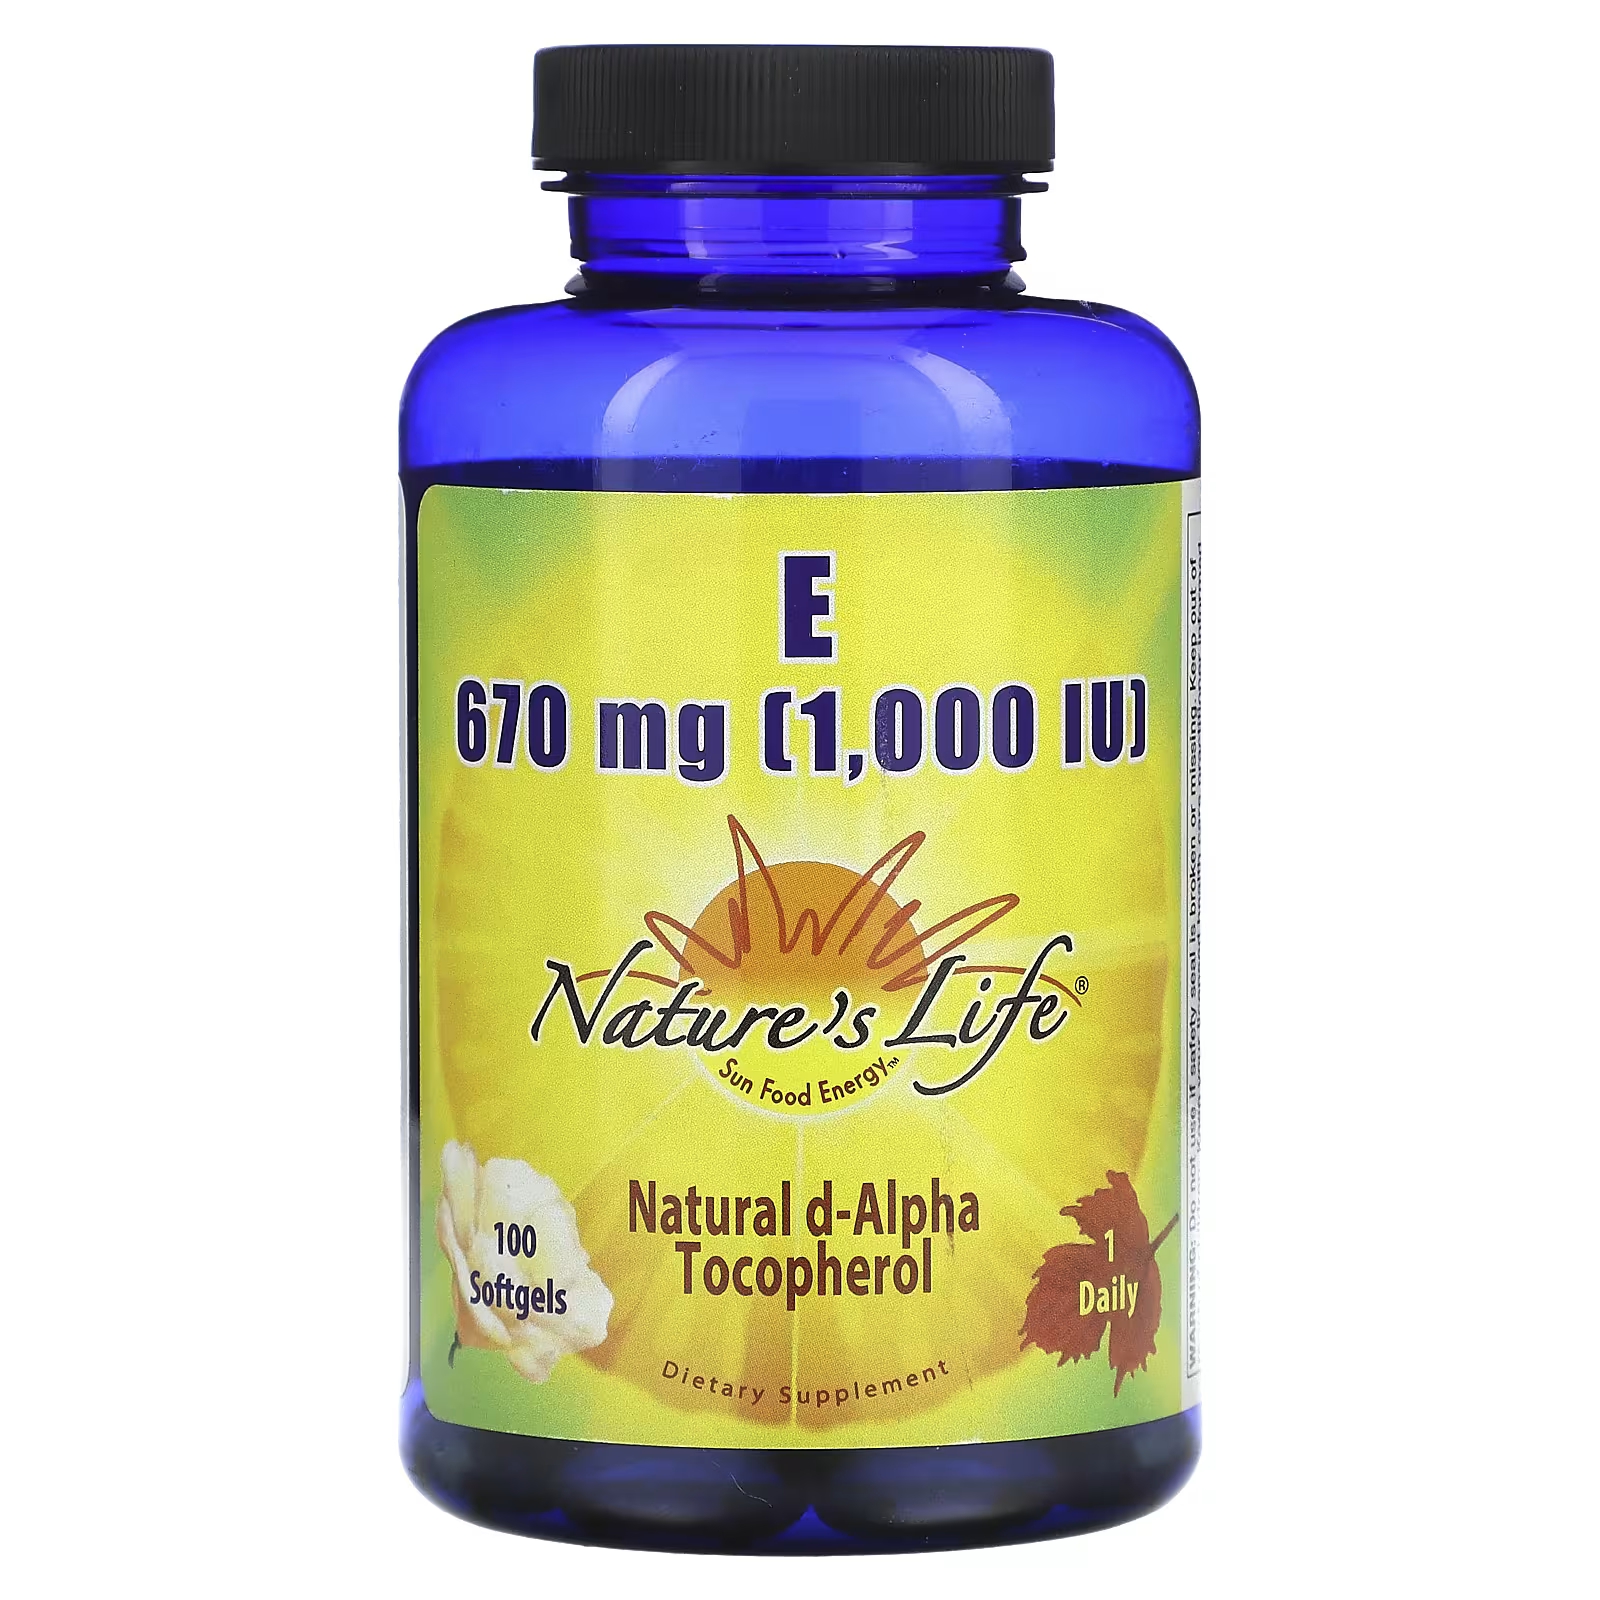 Nature's Life Витамин Е 670 мг (1000 МЕ), 100 мягких таблеток solgar натуральный витамин e 670 мг 1000 ме 100 вегетарианских мягких таблеток